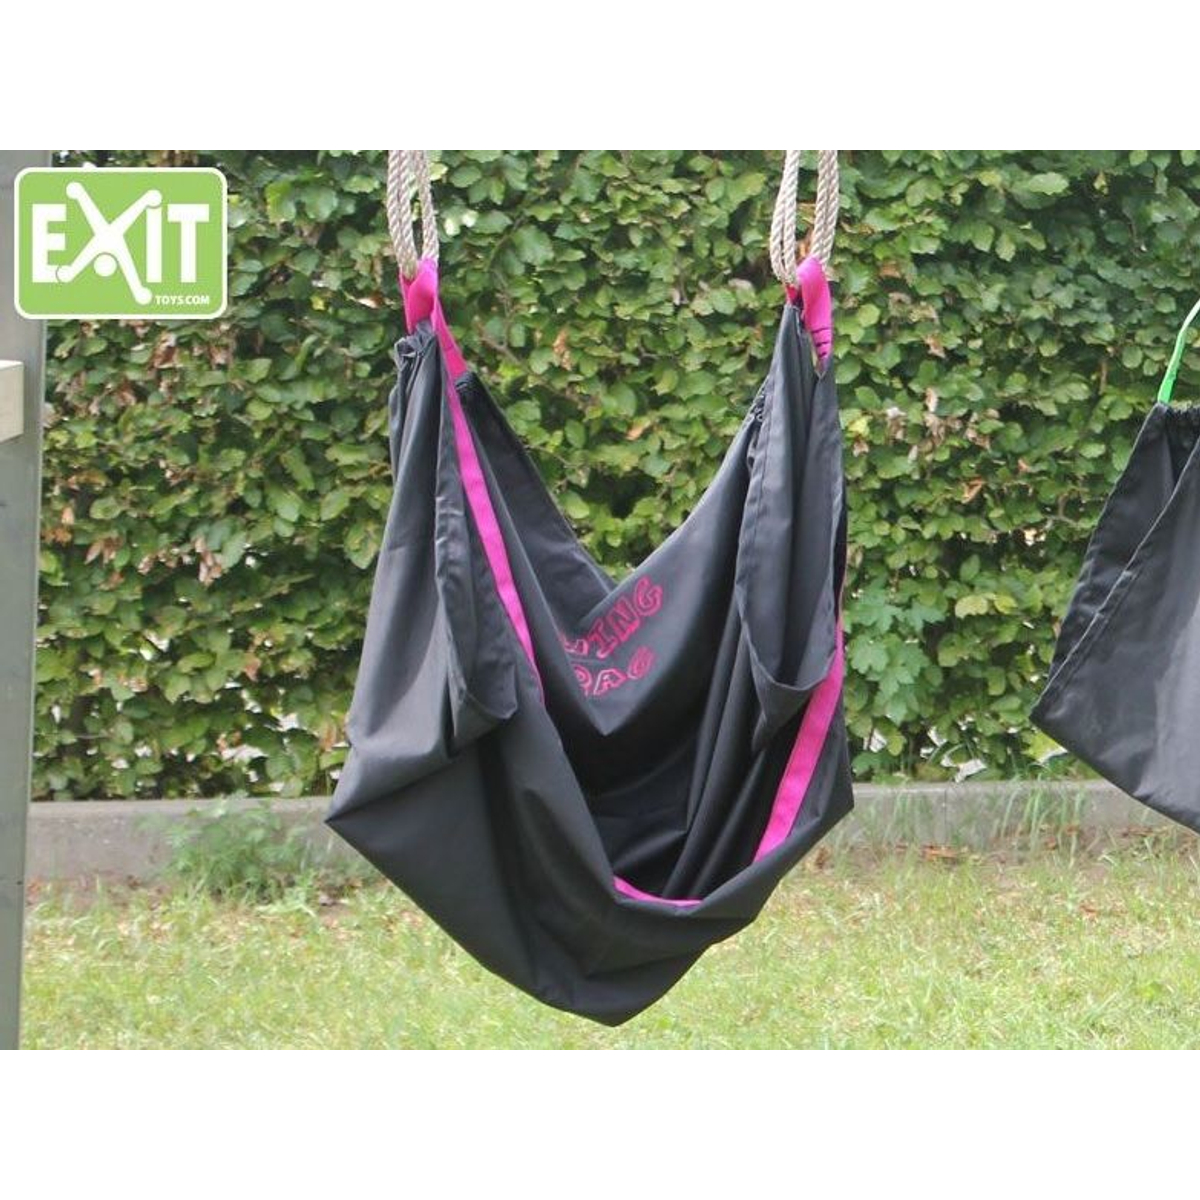 Swingbag EXIT - rose